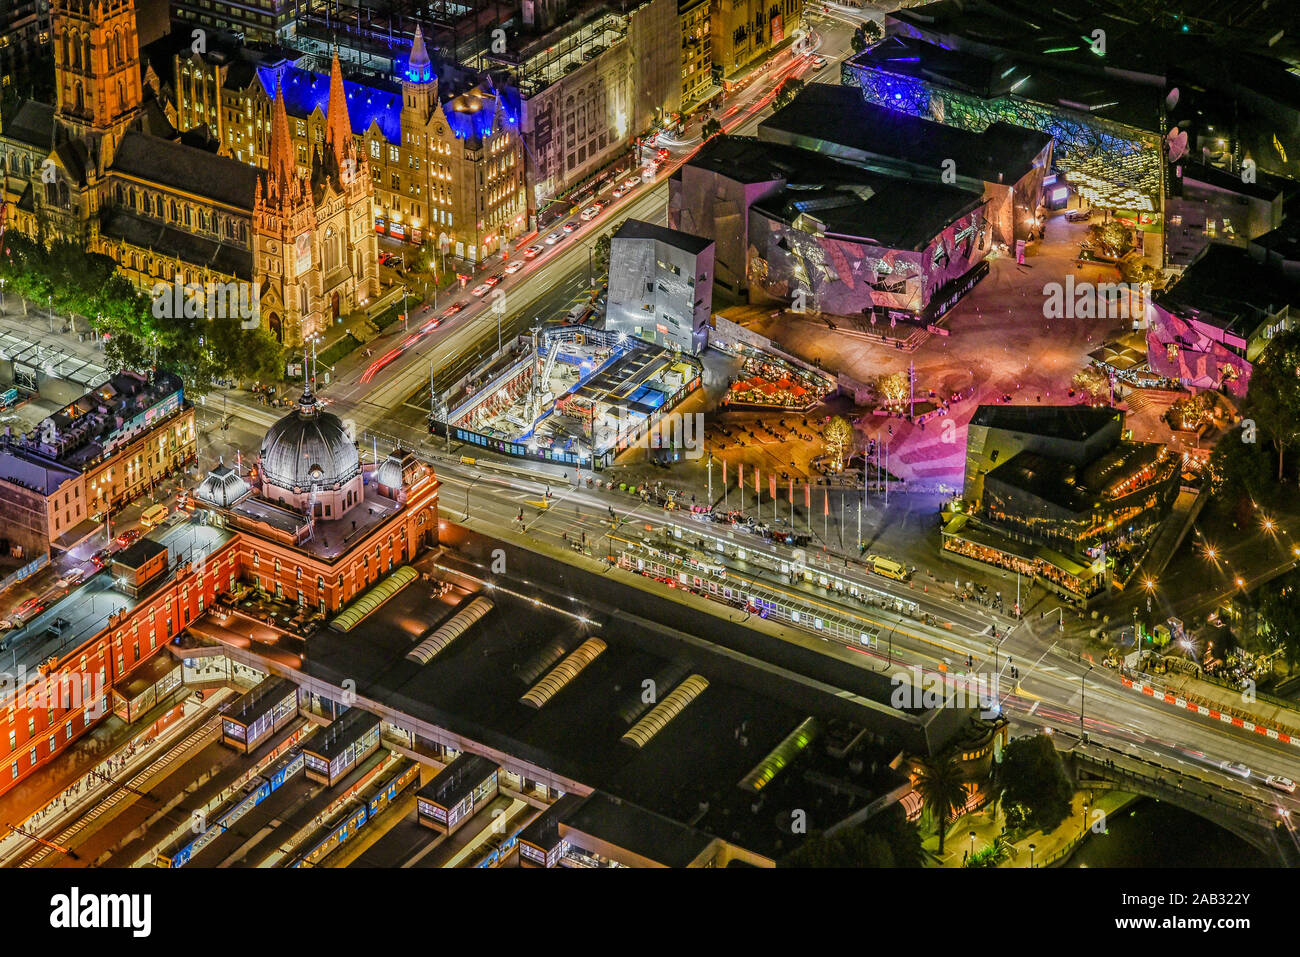 Melbourne, Victoria, Australia, 11 de abril de 2019 - Vista panorámica nocturna de Melbourne desde la torre Eureka Foto Fabio Mazzarella/Sintesi/Alamy Sto Foto de stock